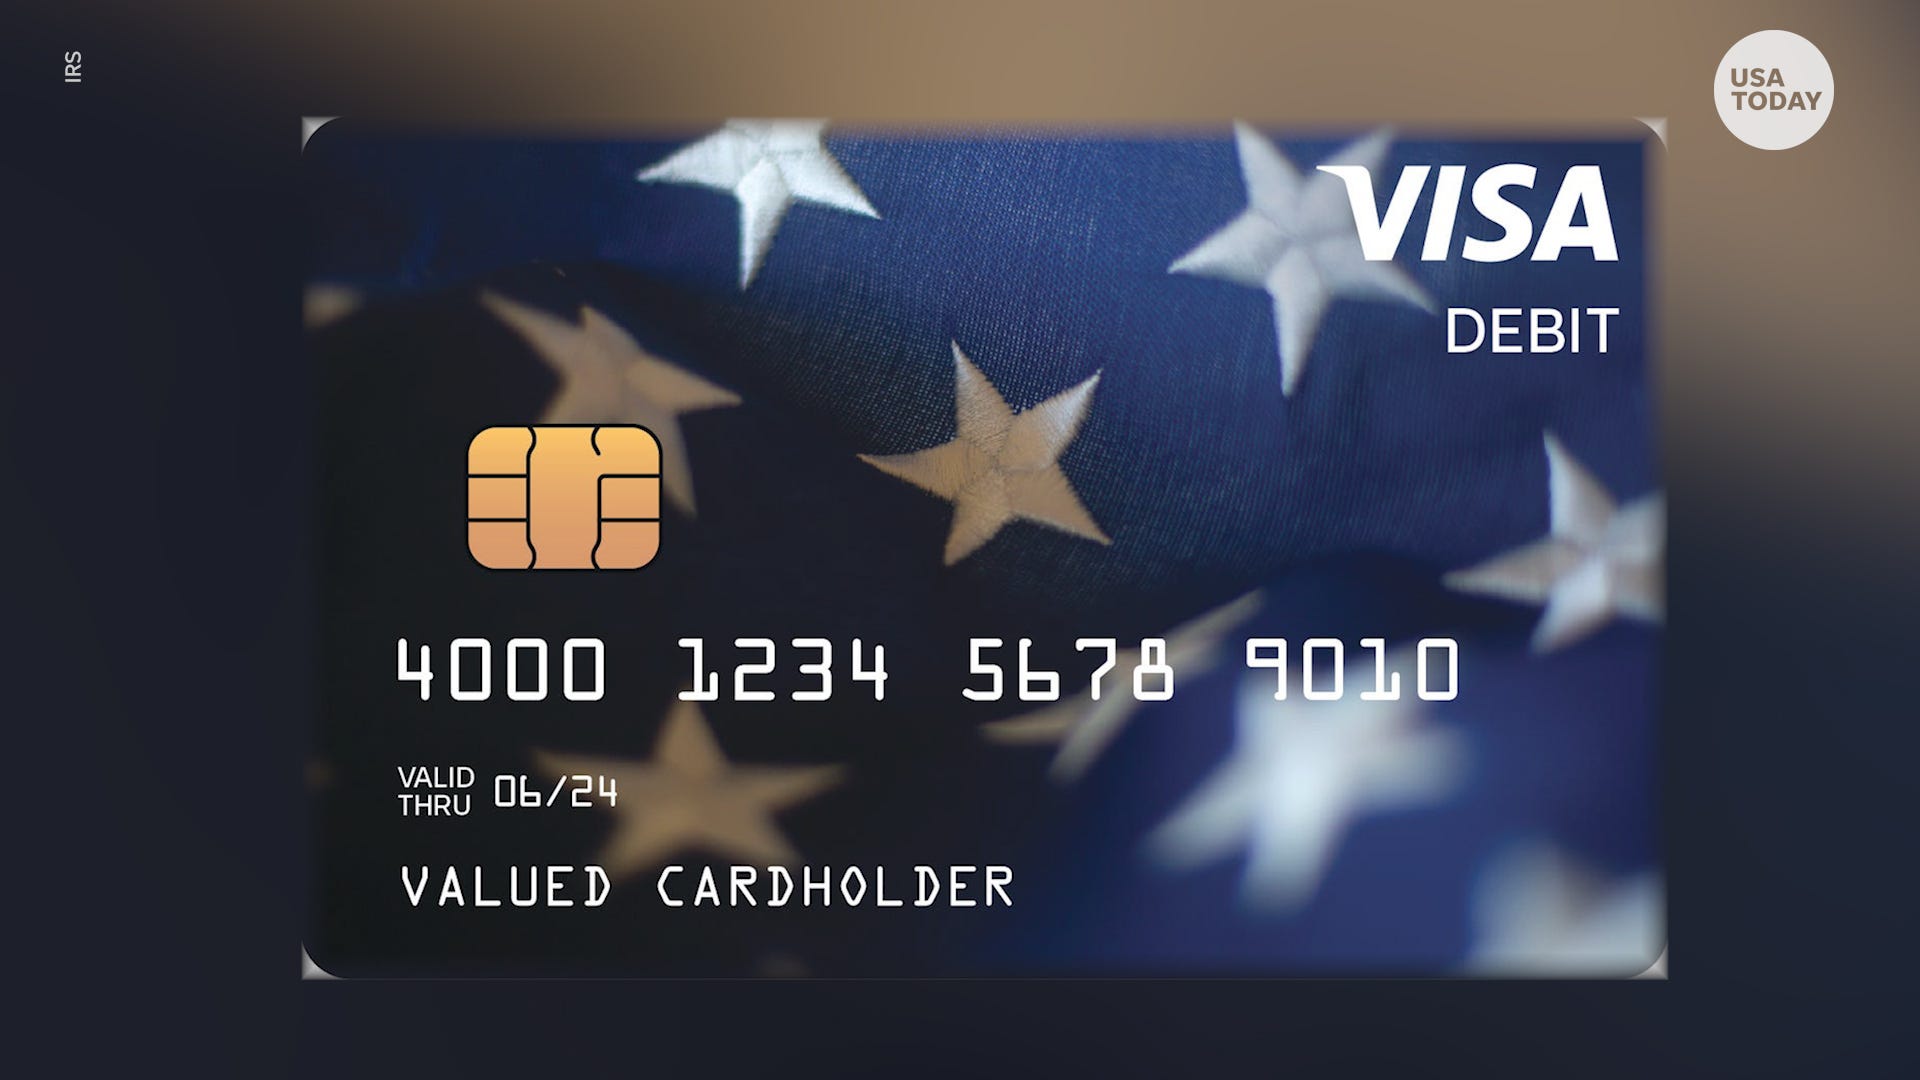 Paper Checks Prepaid Visa Cards From Third Stimulus Coming Via Mail